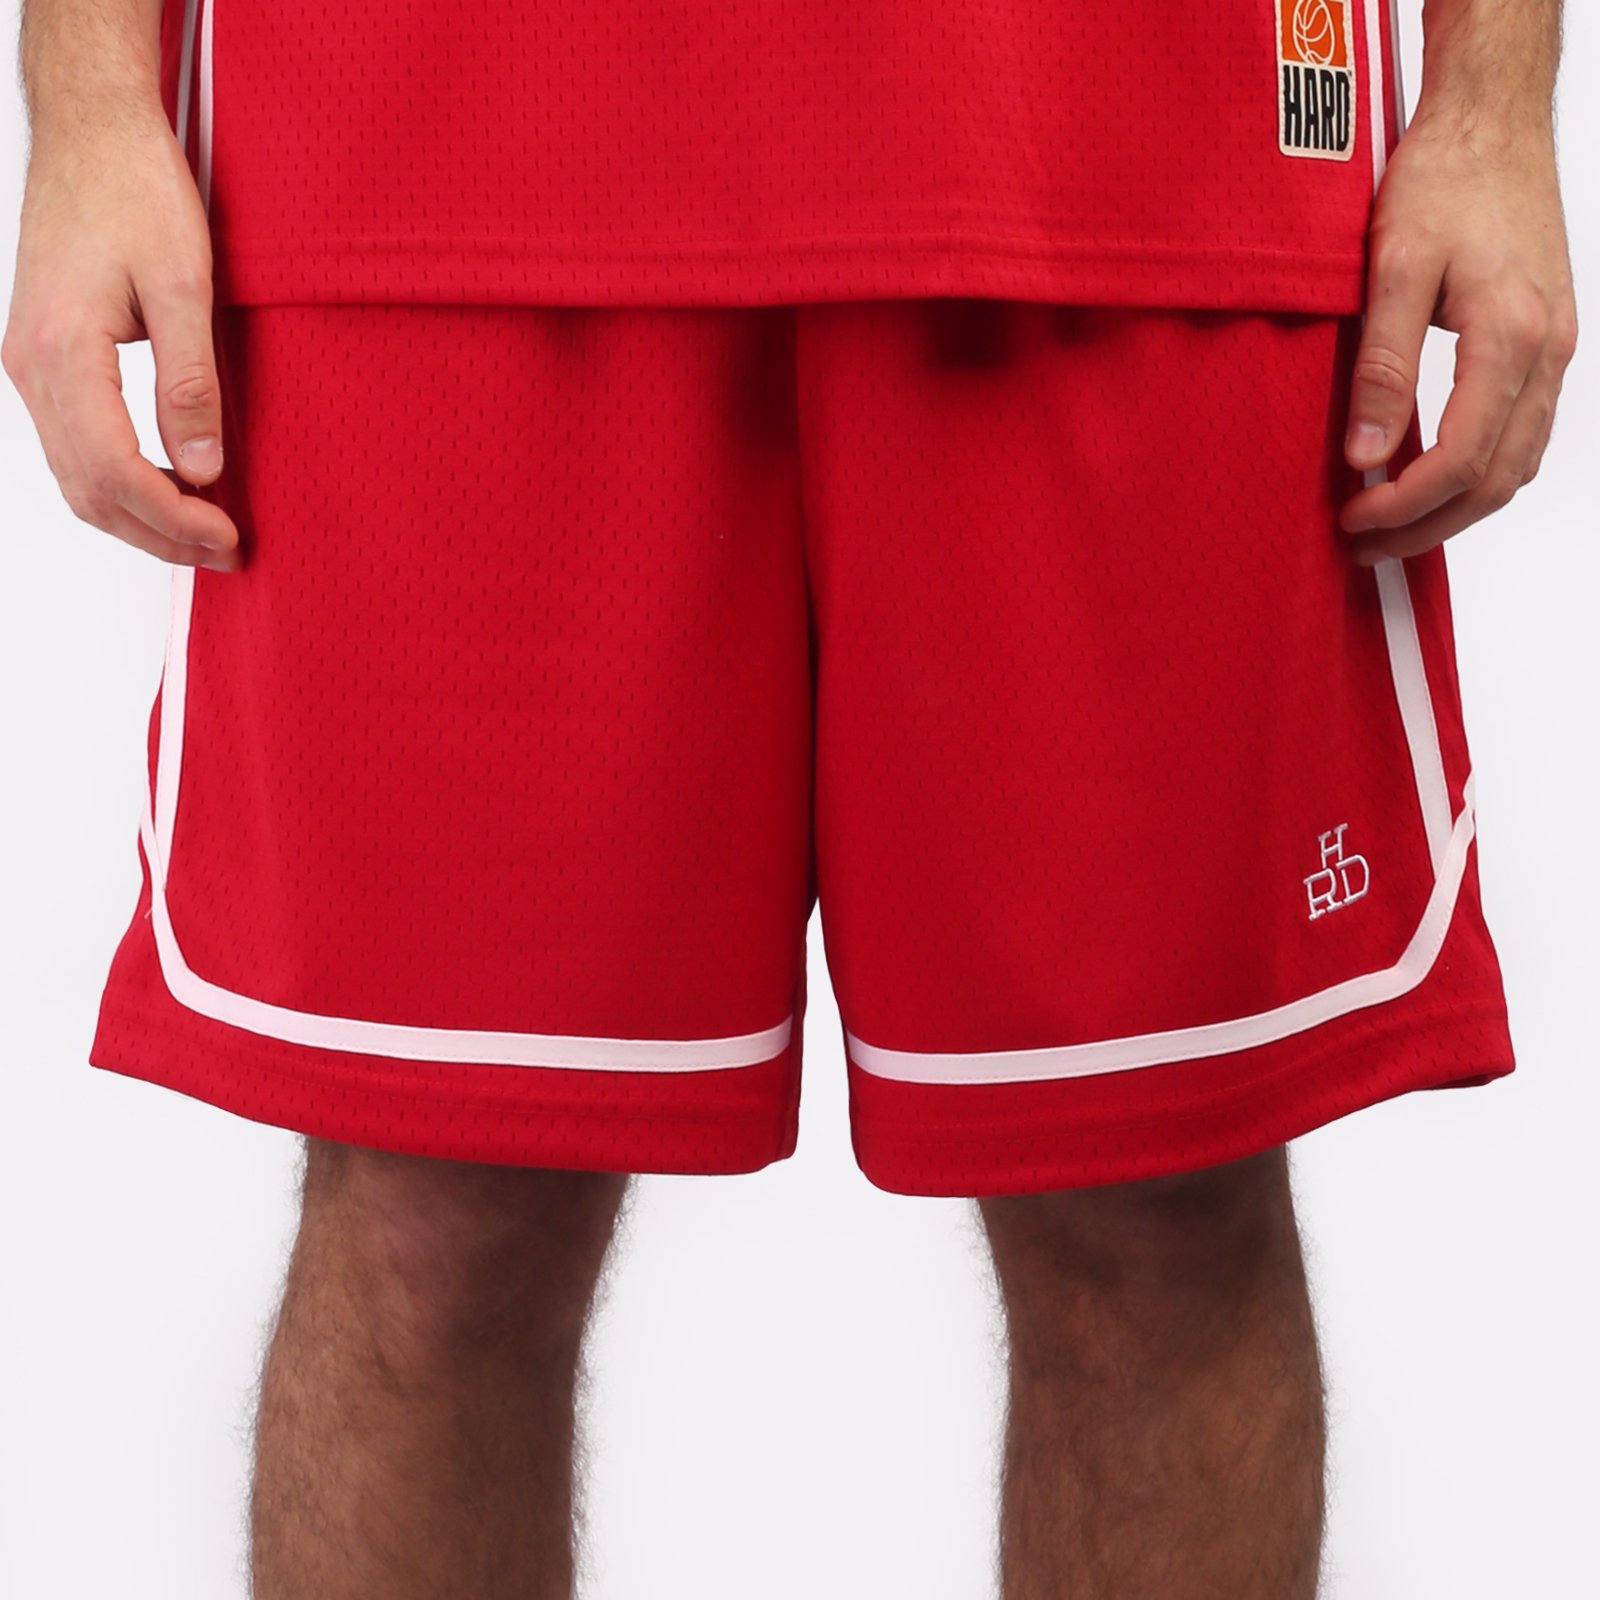 мужские шорты Hard Teammate  (Teammate short-red/wht)  - цена, описание, фото 1